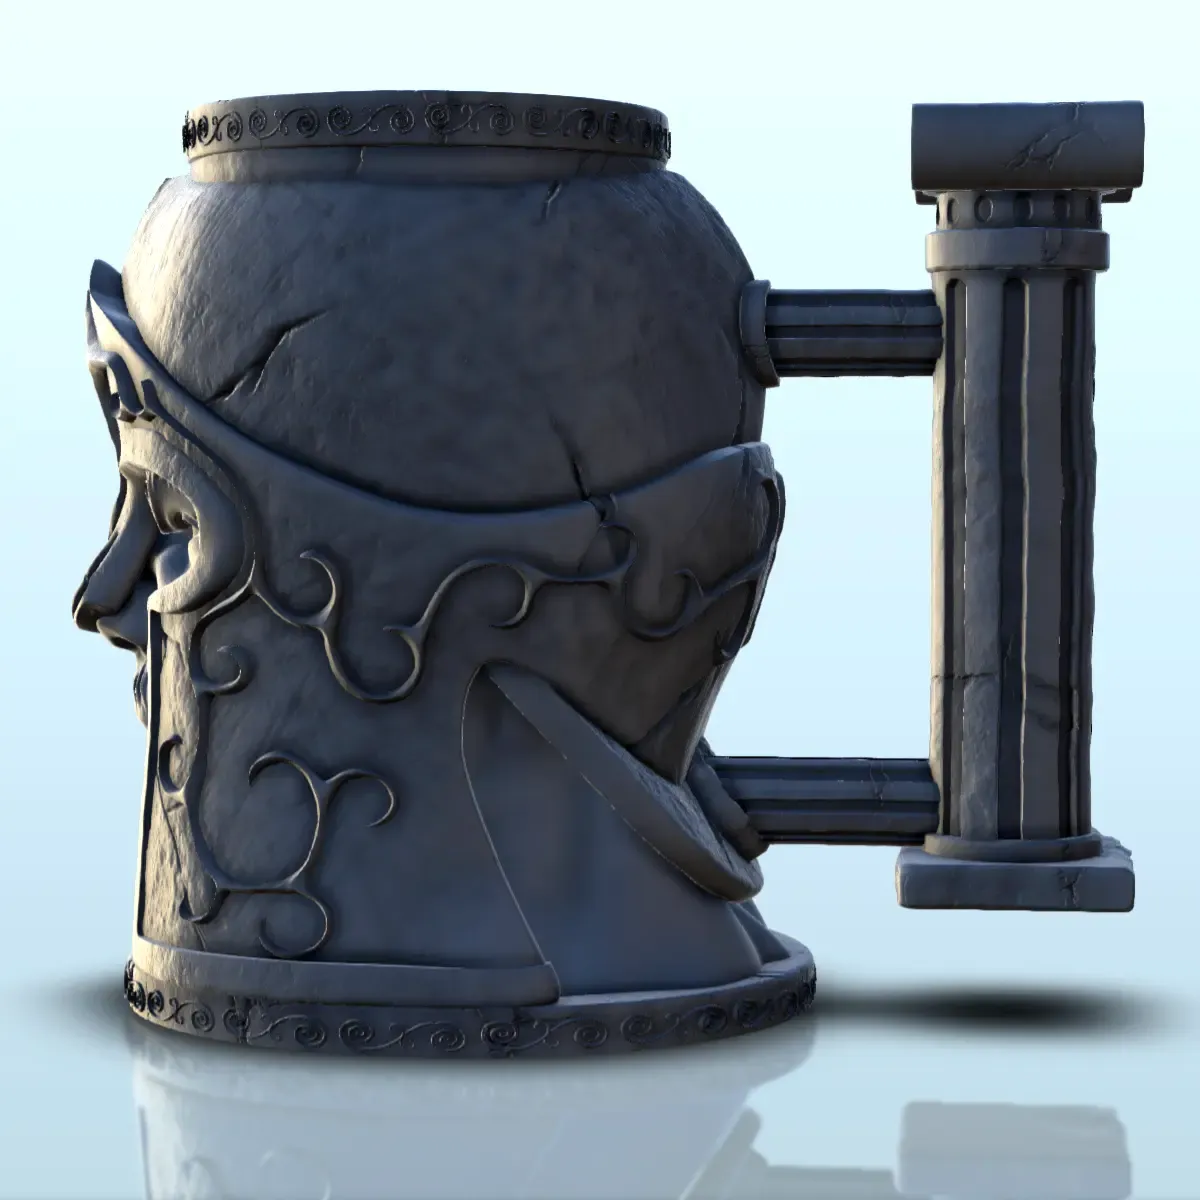 Spartanian soldier dice mug (21) - beer can holder